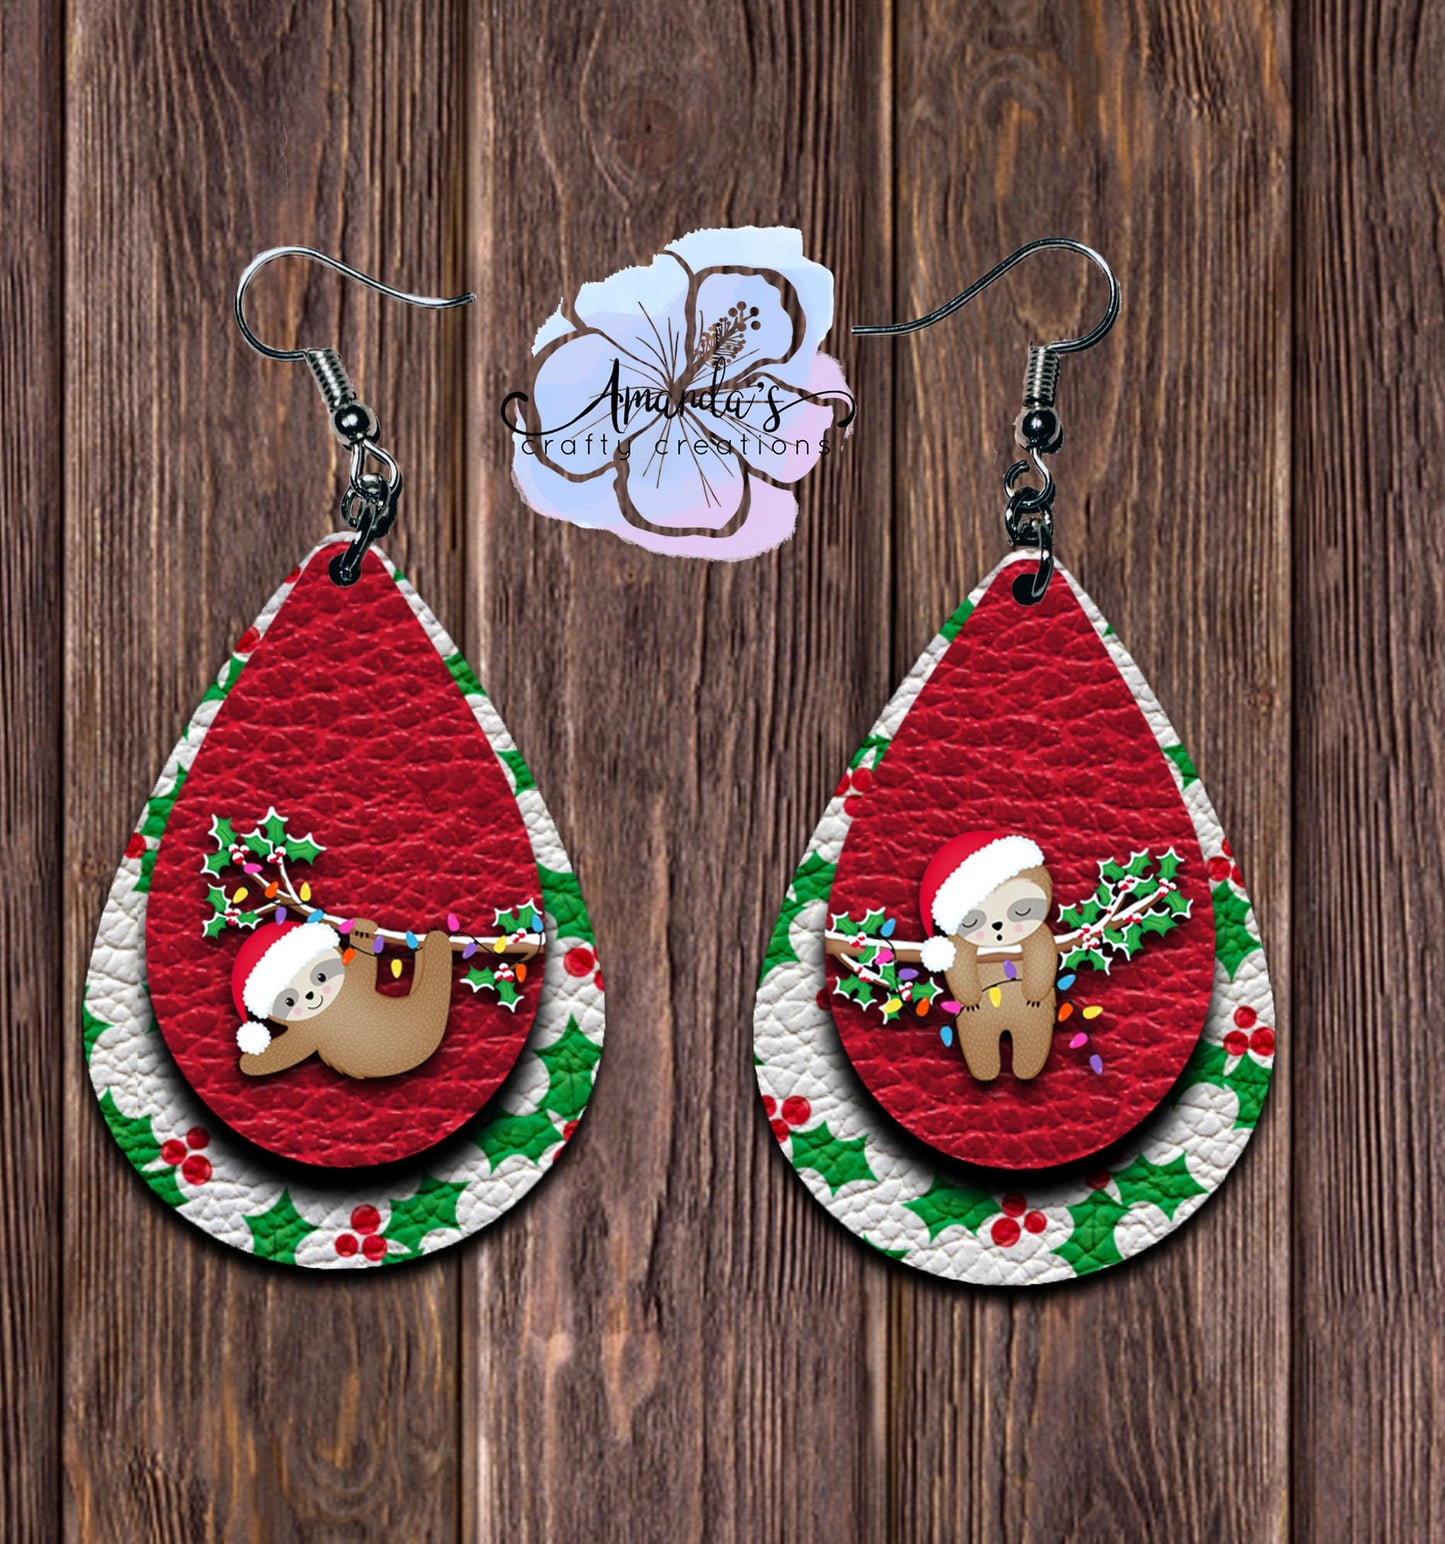 Drop Earrings, Dangle Earrings, Christmas Sloths, Earrings, Leather Texture Earrings, Layered look earrings, Drop earrings jewelry